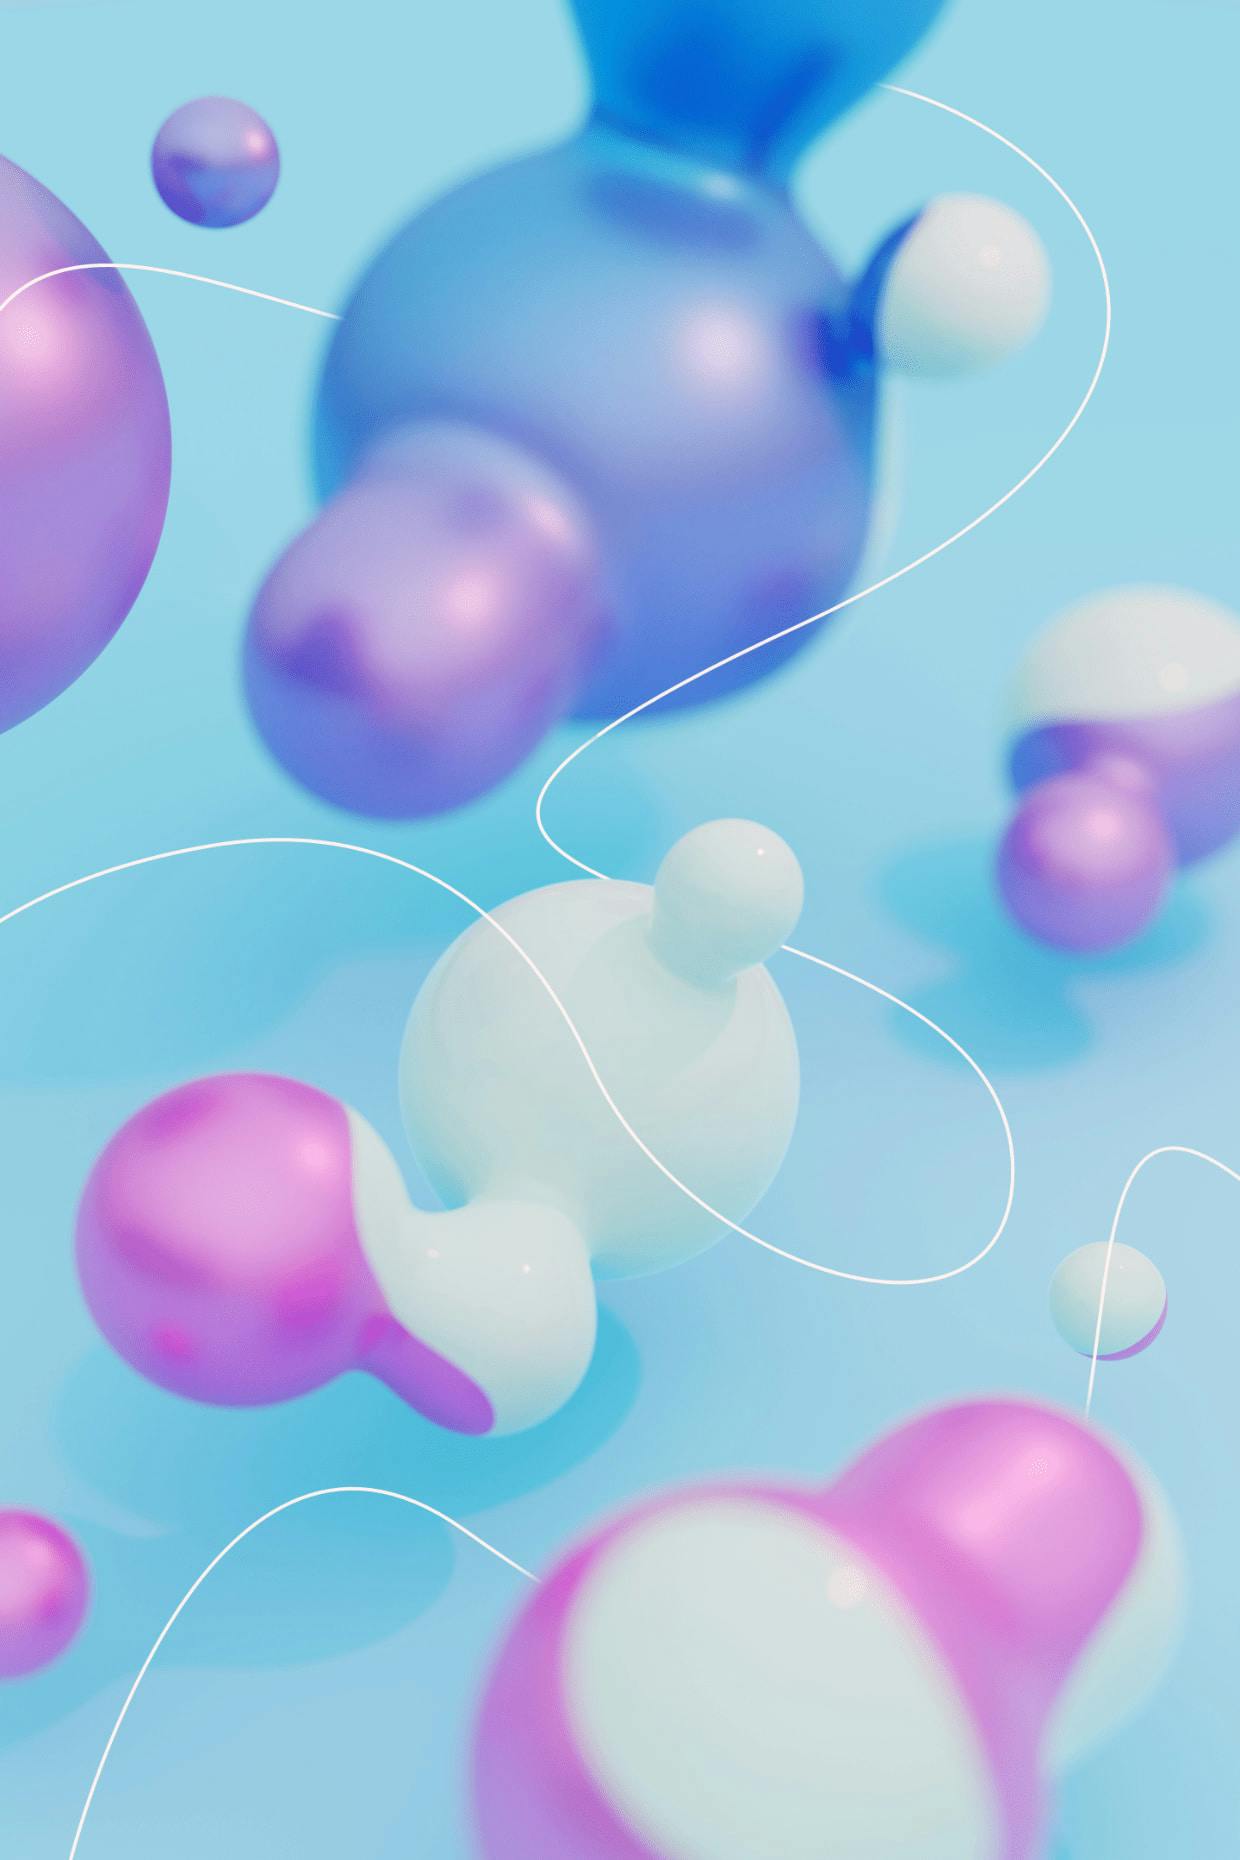 semi-glossy round blob shapes floating amidst a thin line that swirls around them 